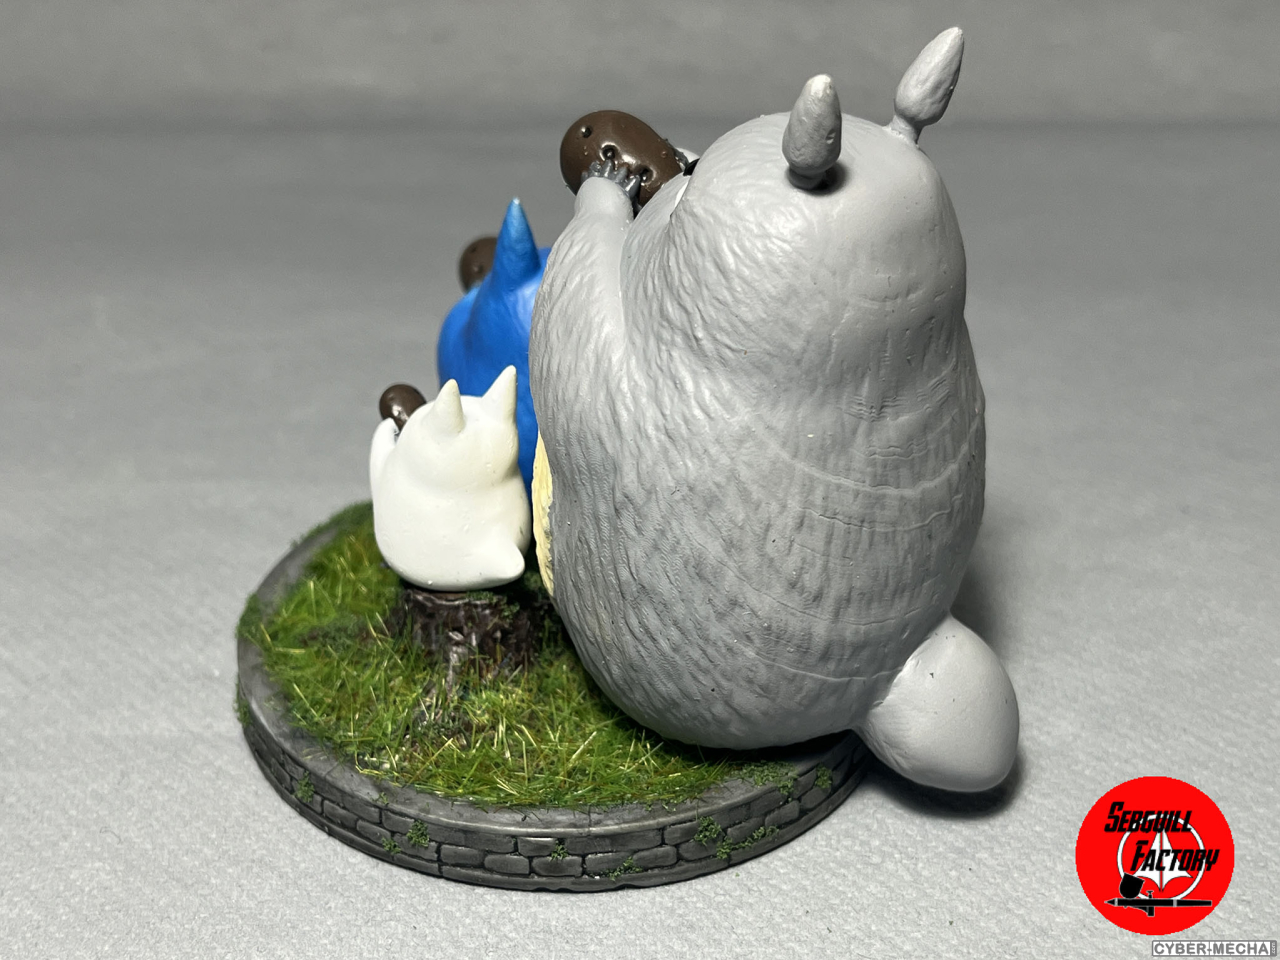 Print 3D : Totoro 1701076897